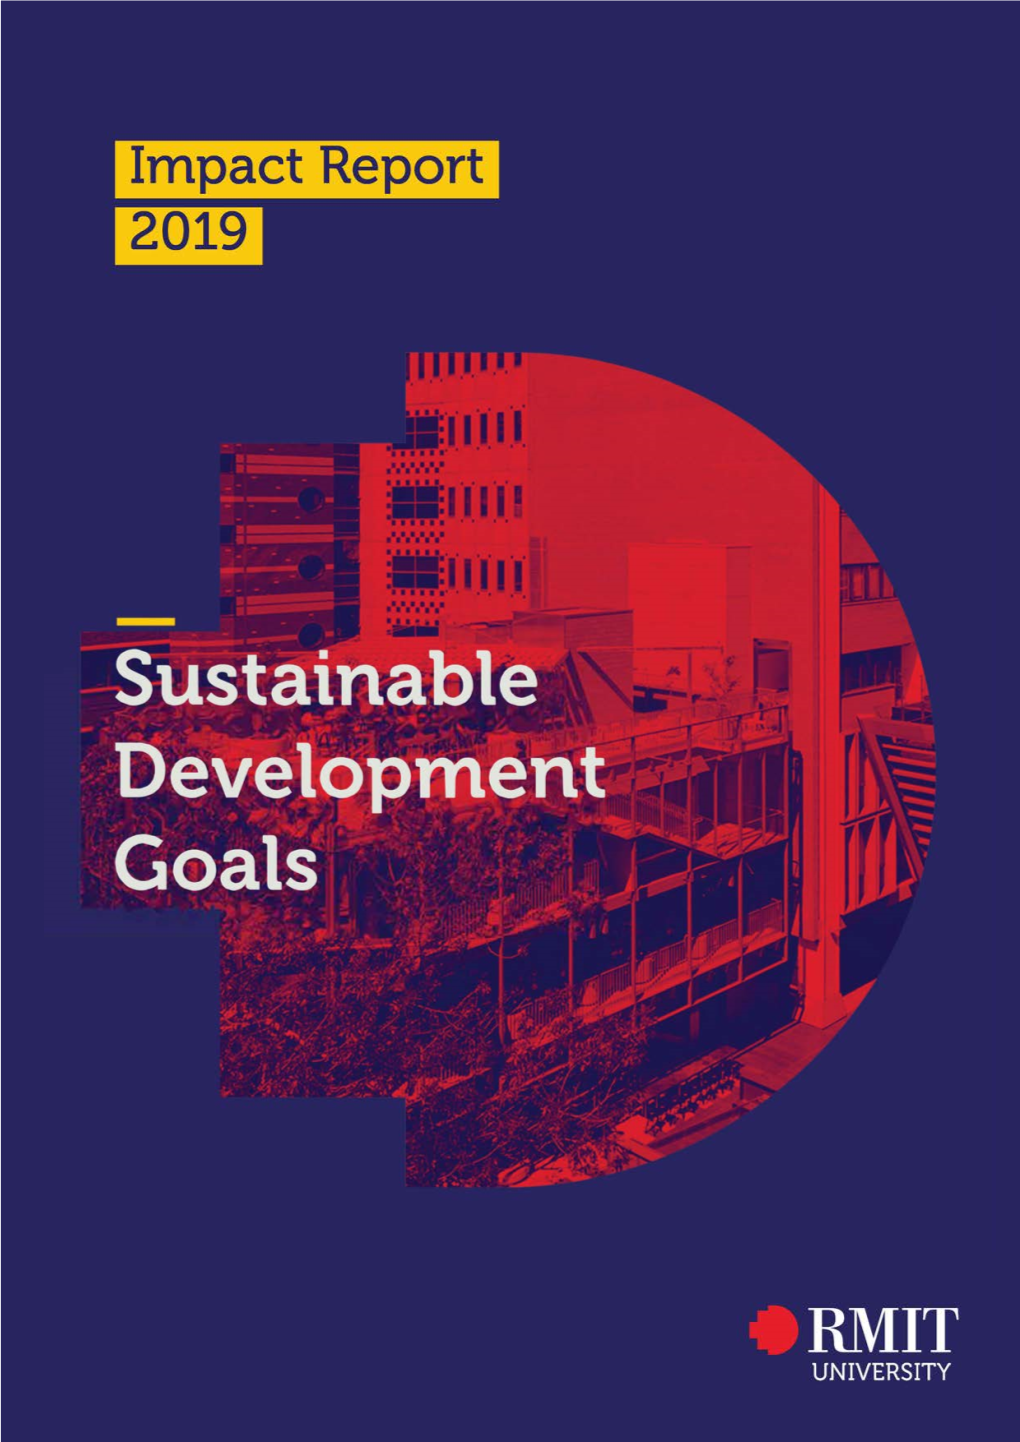 SDG Impact Report